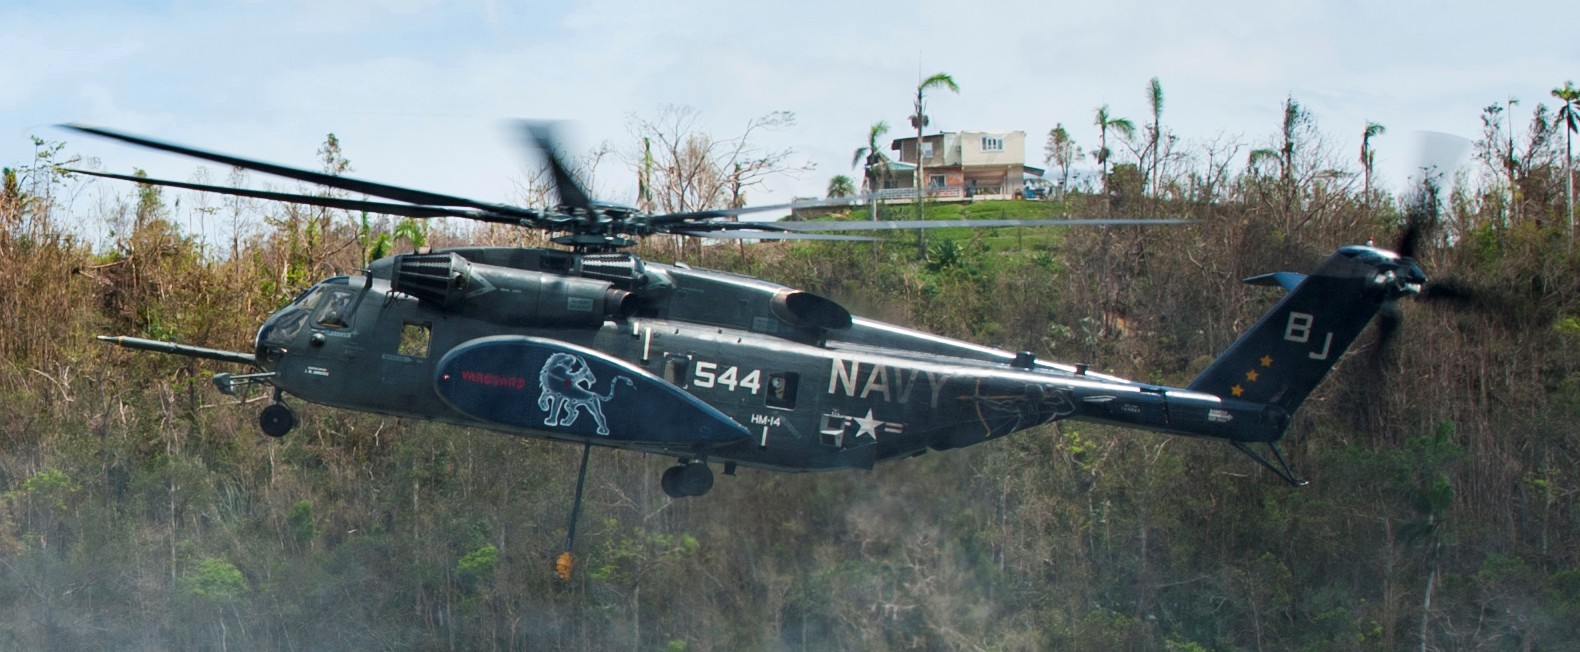 hm-14 vanguard helicopter mine countermeasures squadron navy mh-53e sea dragon 05